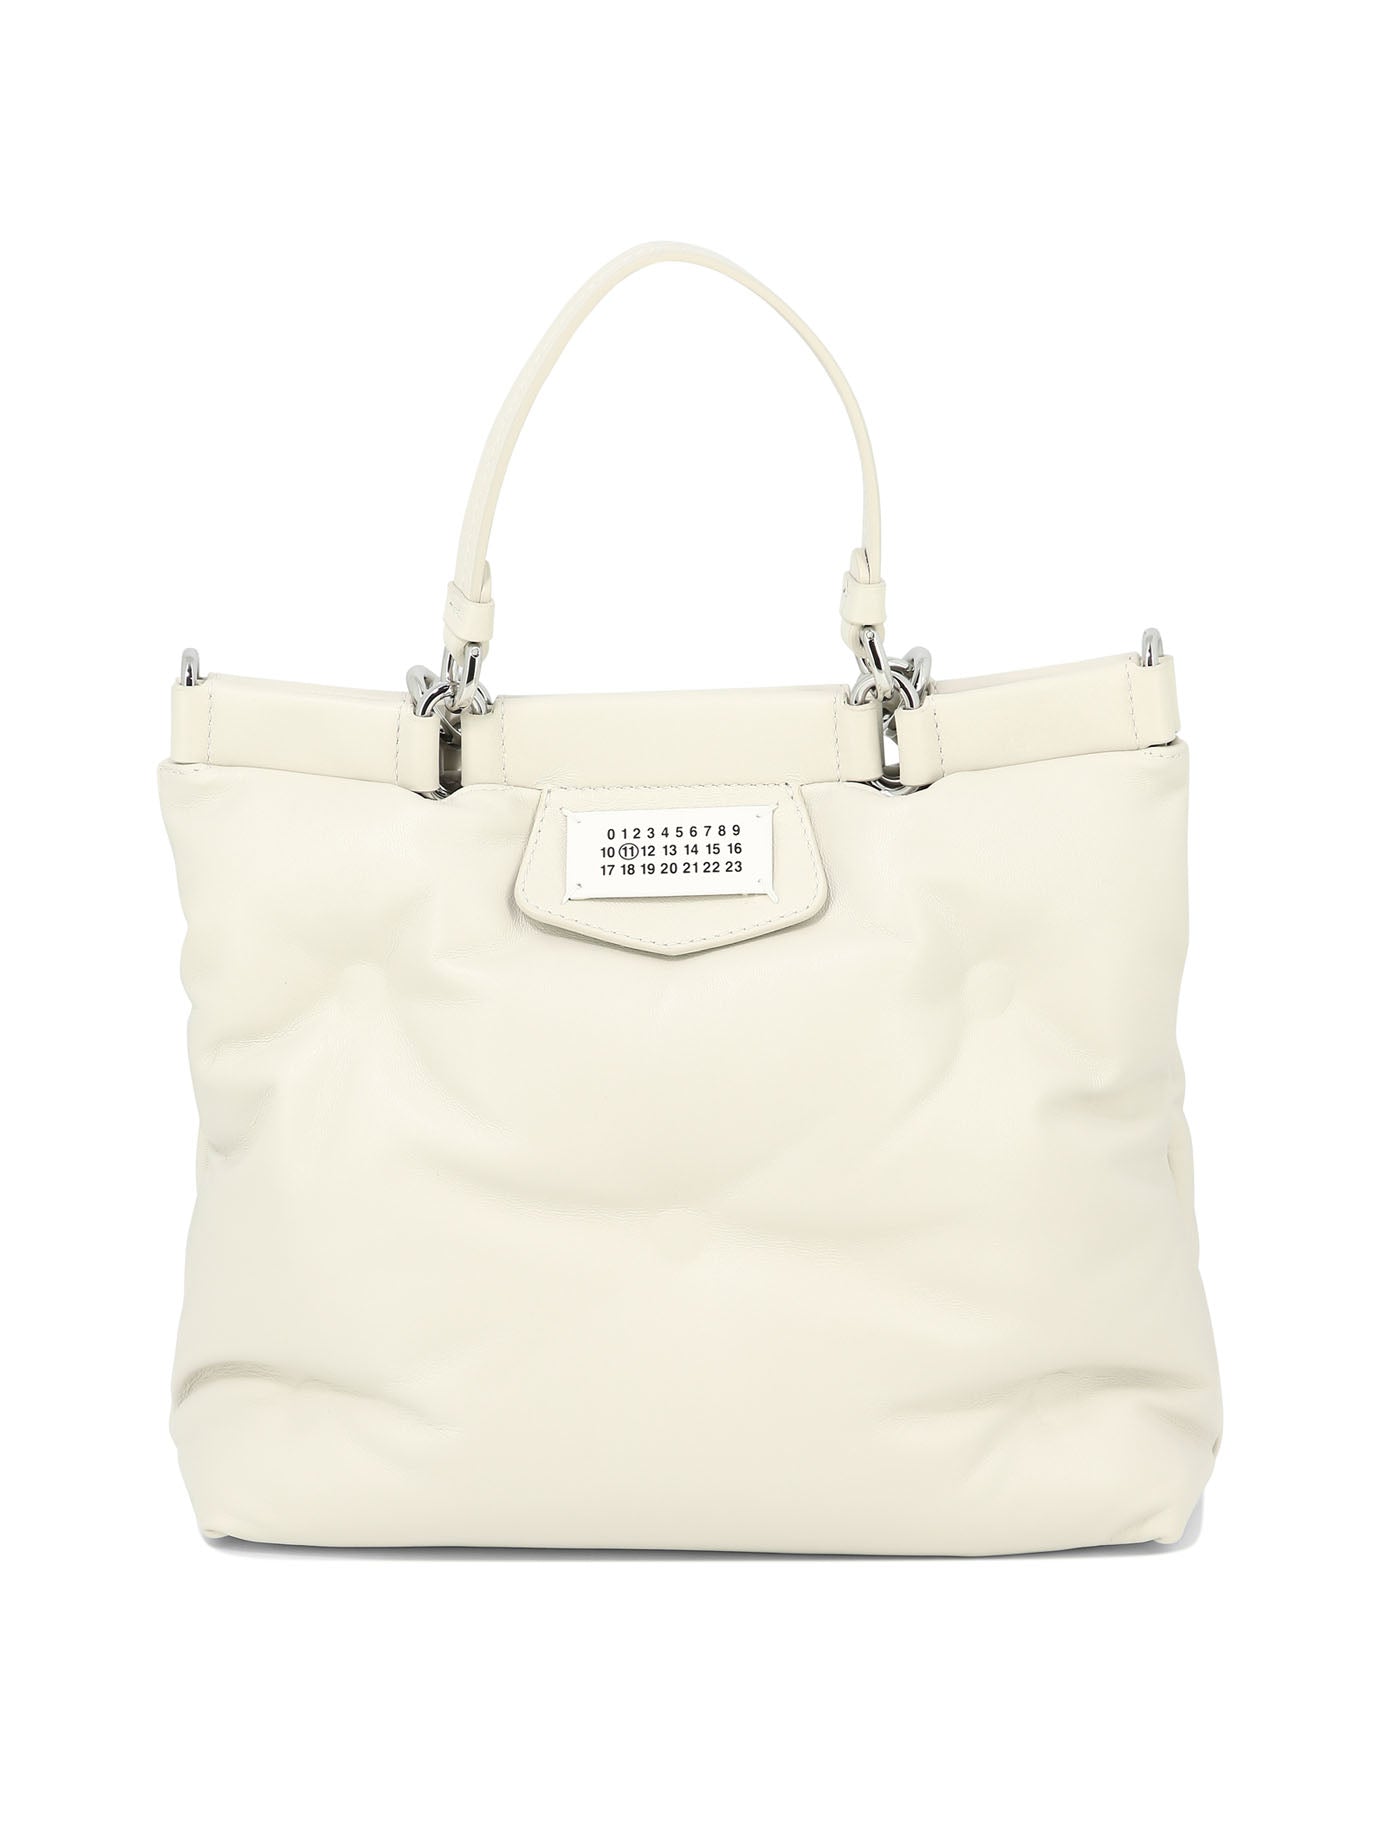 Shop Maison Margiela Luxurious White Leather Handbag For Women